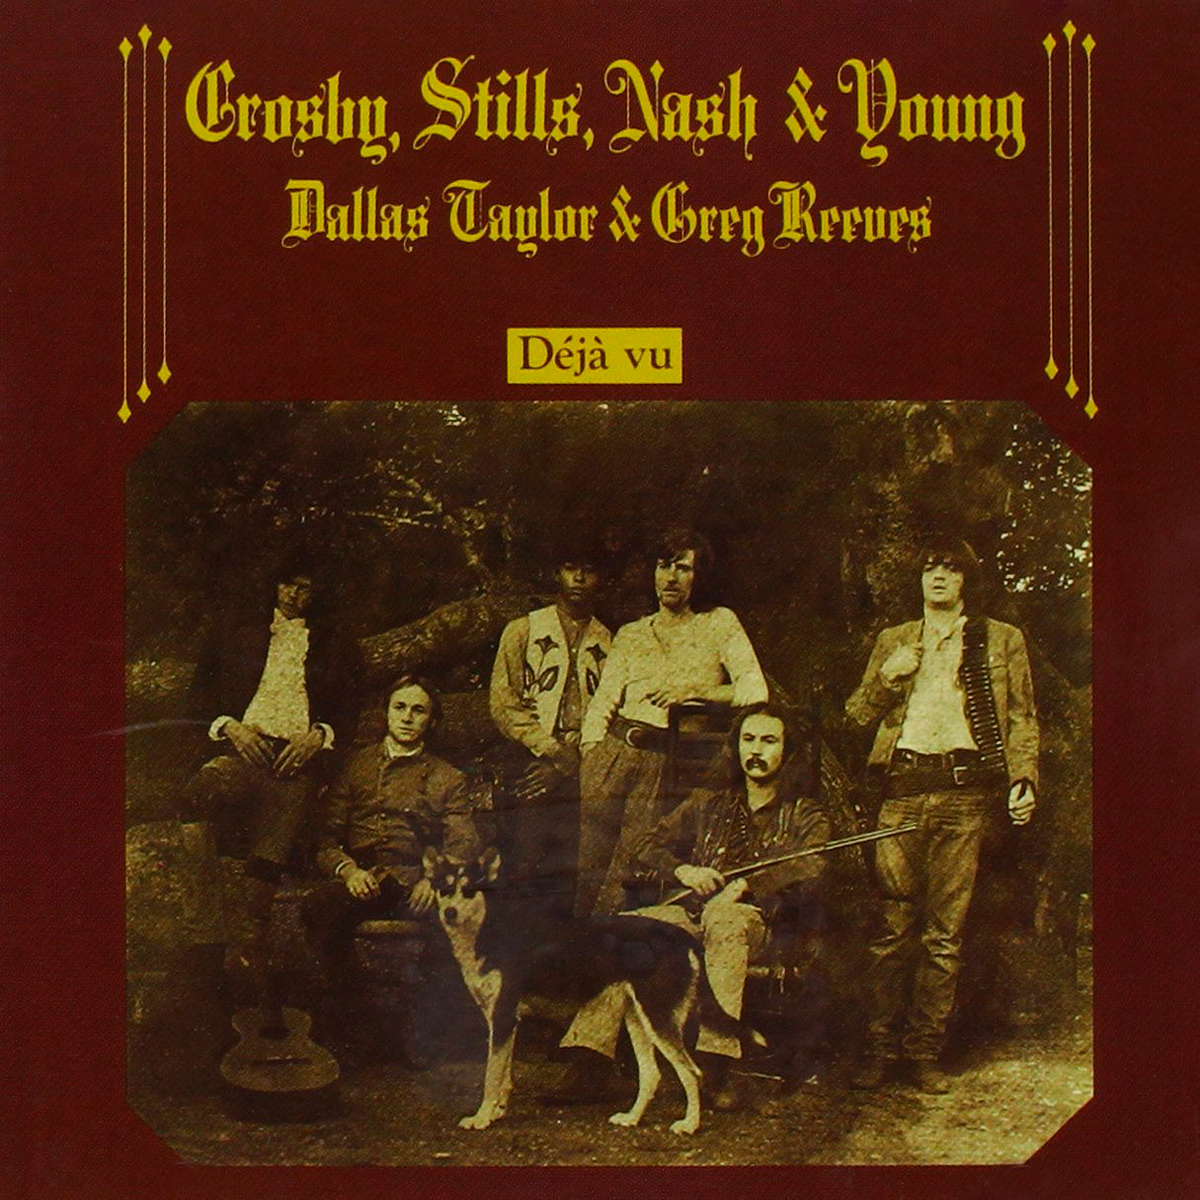 Crosby, Stills, Nash & Young - Deja vu (1970/1994/2016) [PonoMusic FLAC 24bit/192kHz]